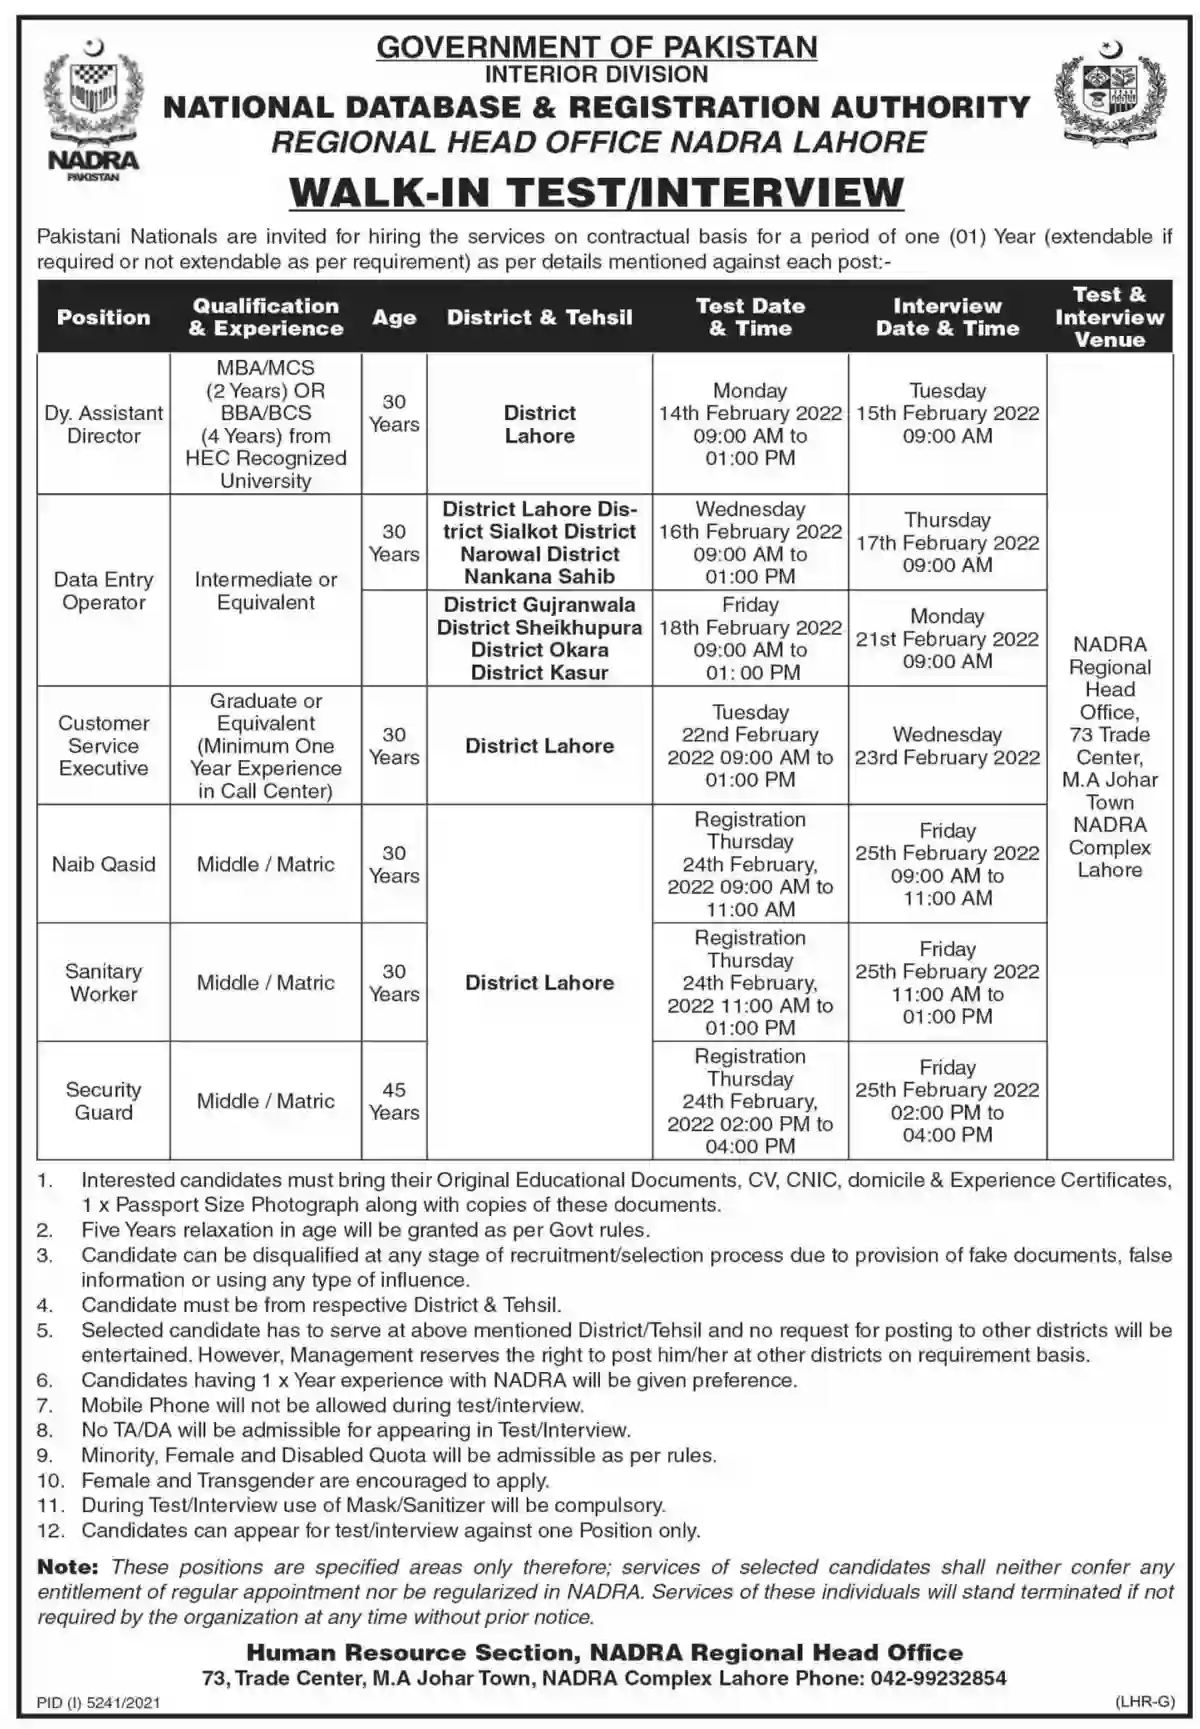 National Database and Registration Authority NADRA Lahore Jobs 2022 Latest